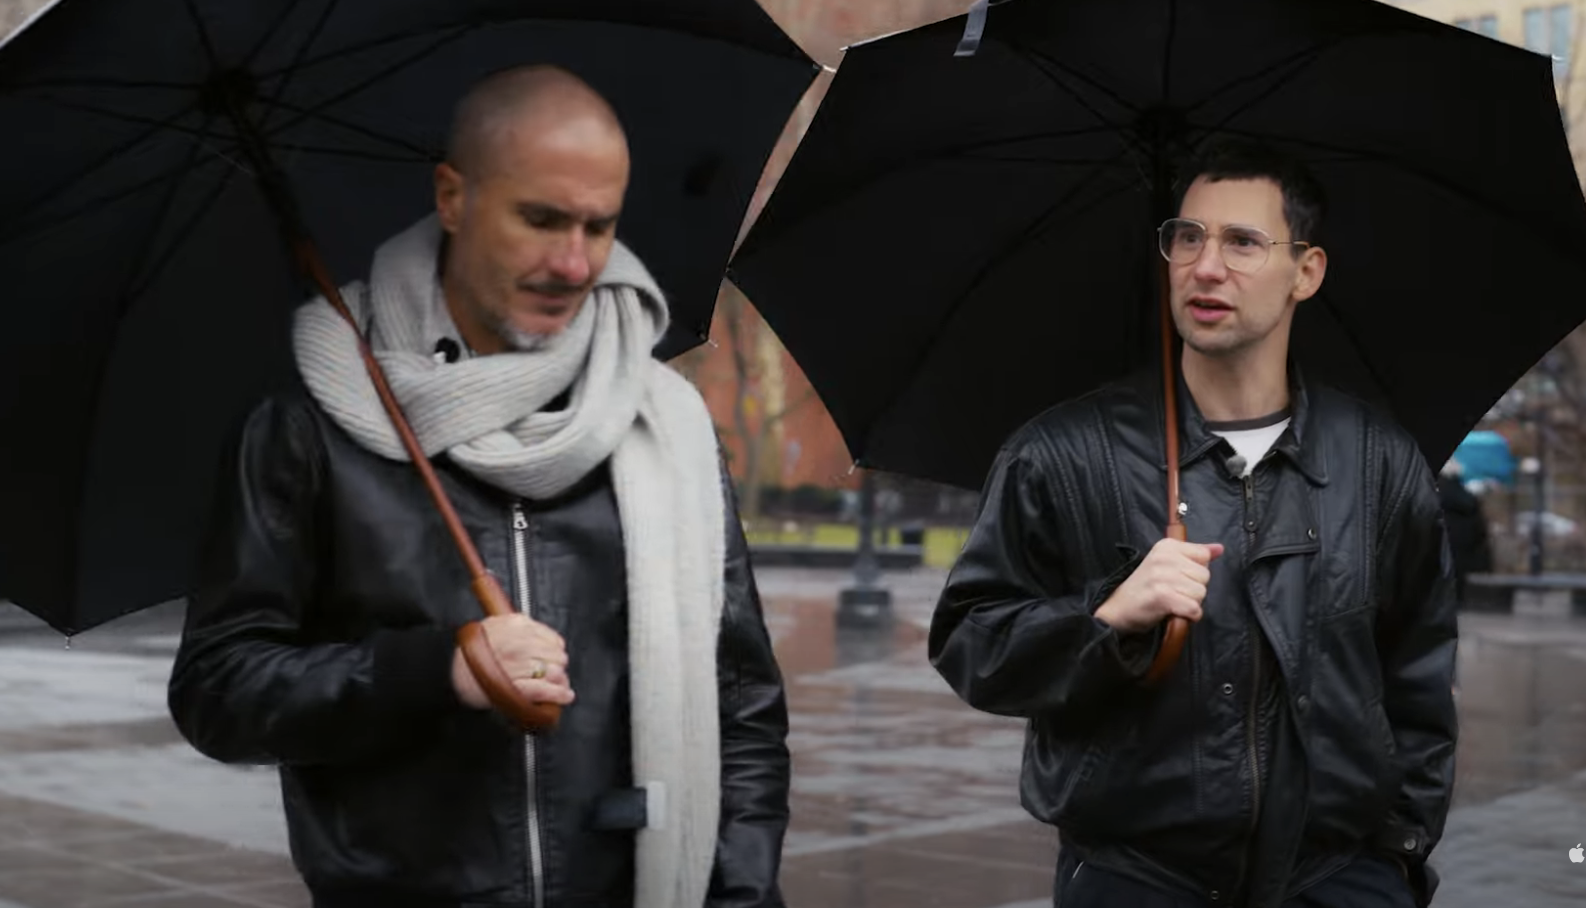 Zane and Jack walking outside under umbrellas